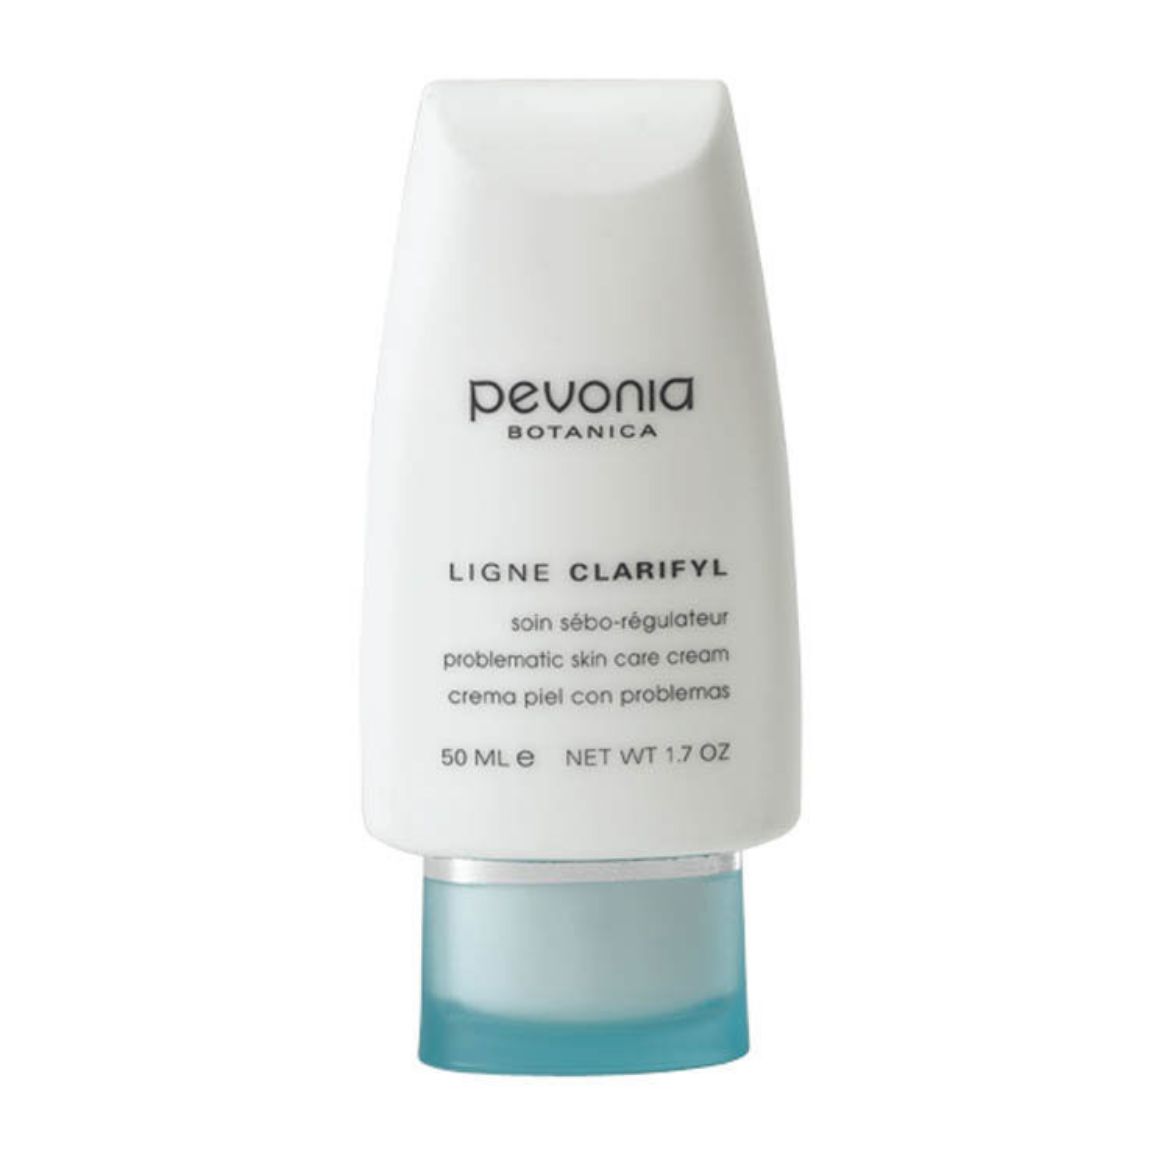 Image of Pevonia Problematic Skin Care Cream (50ml)